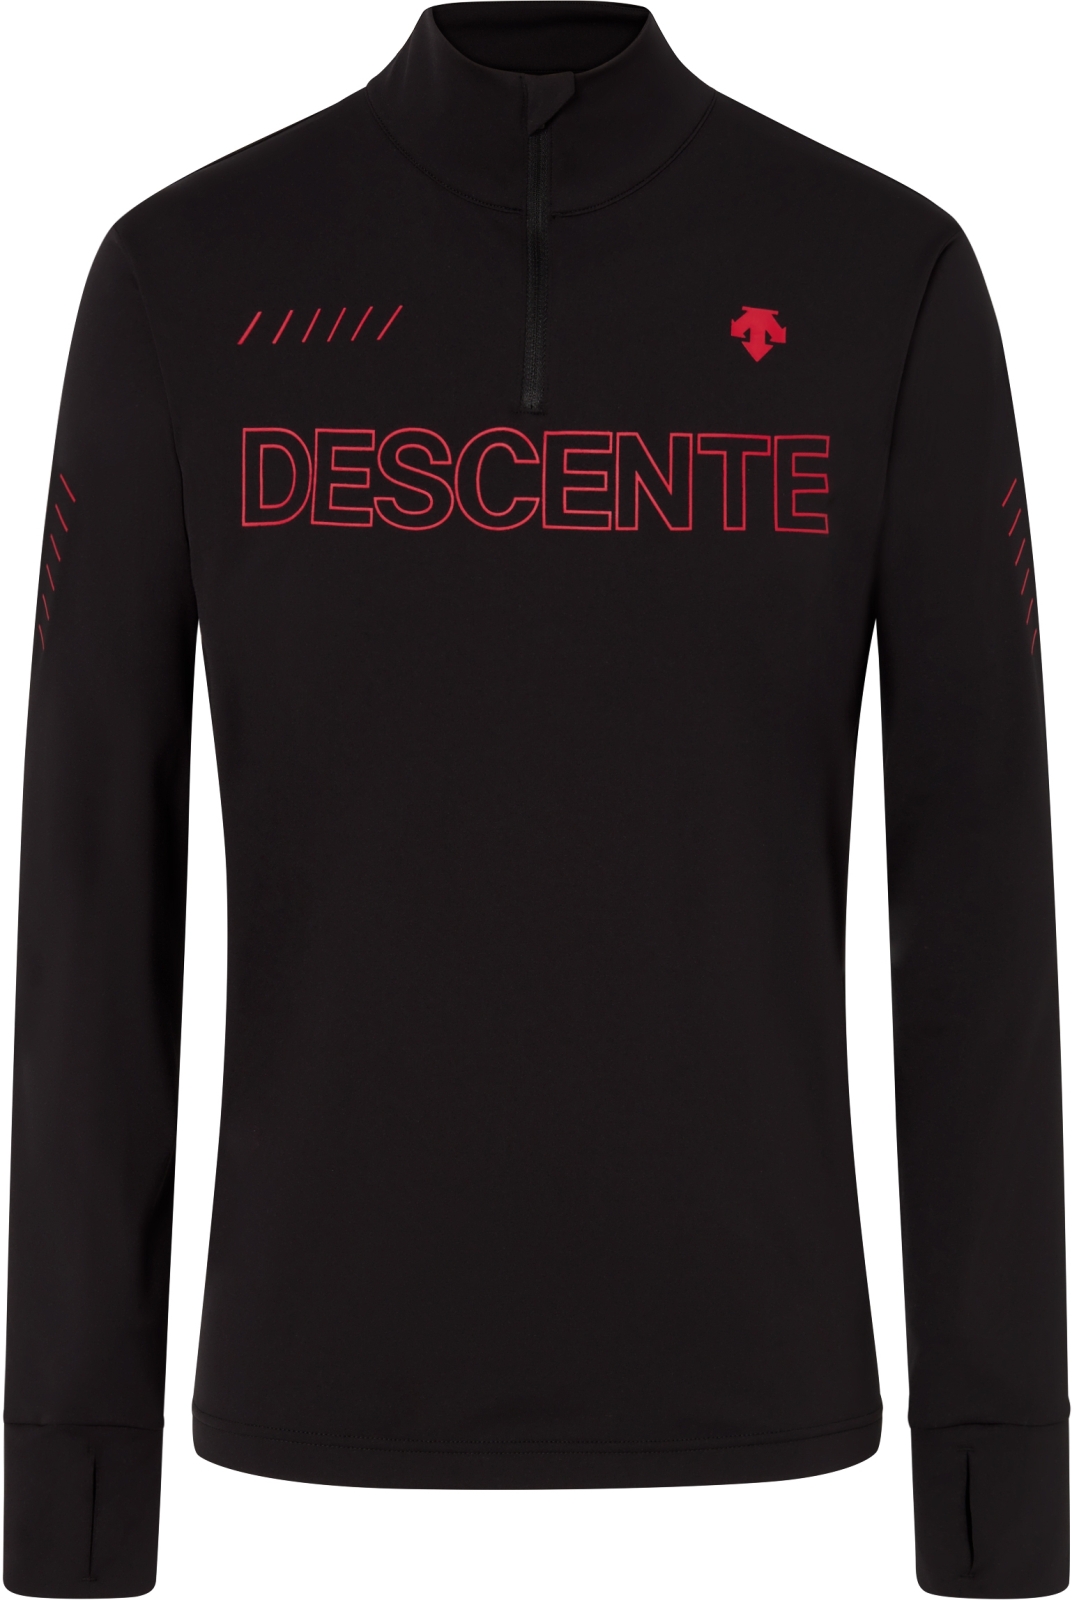 E-shop Descente Descente 1/4 Zip T-Neck - Black M